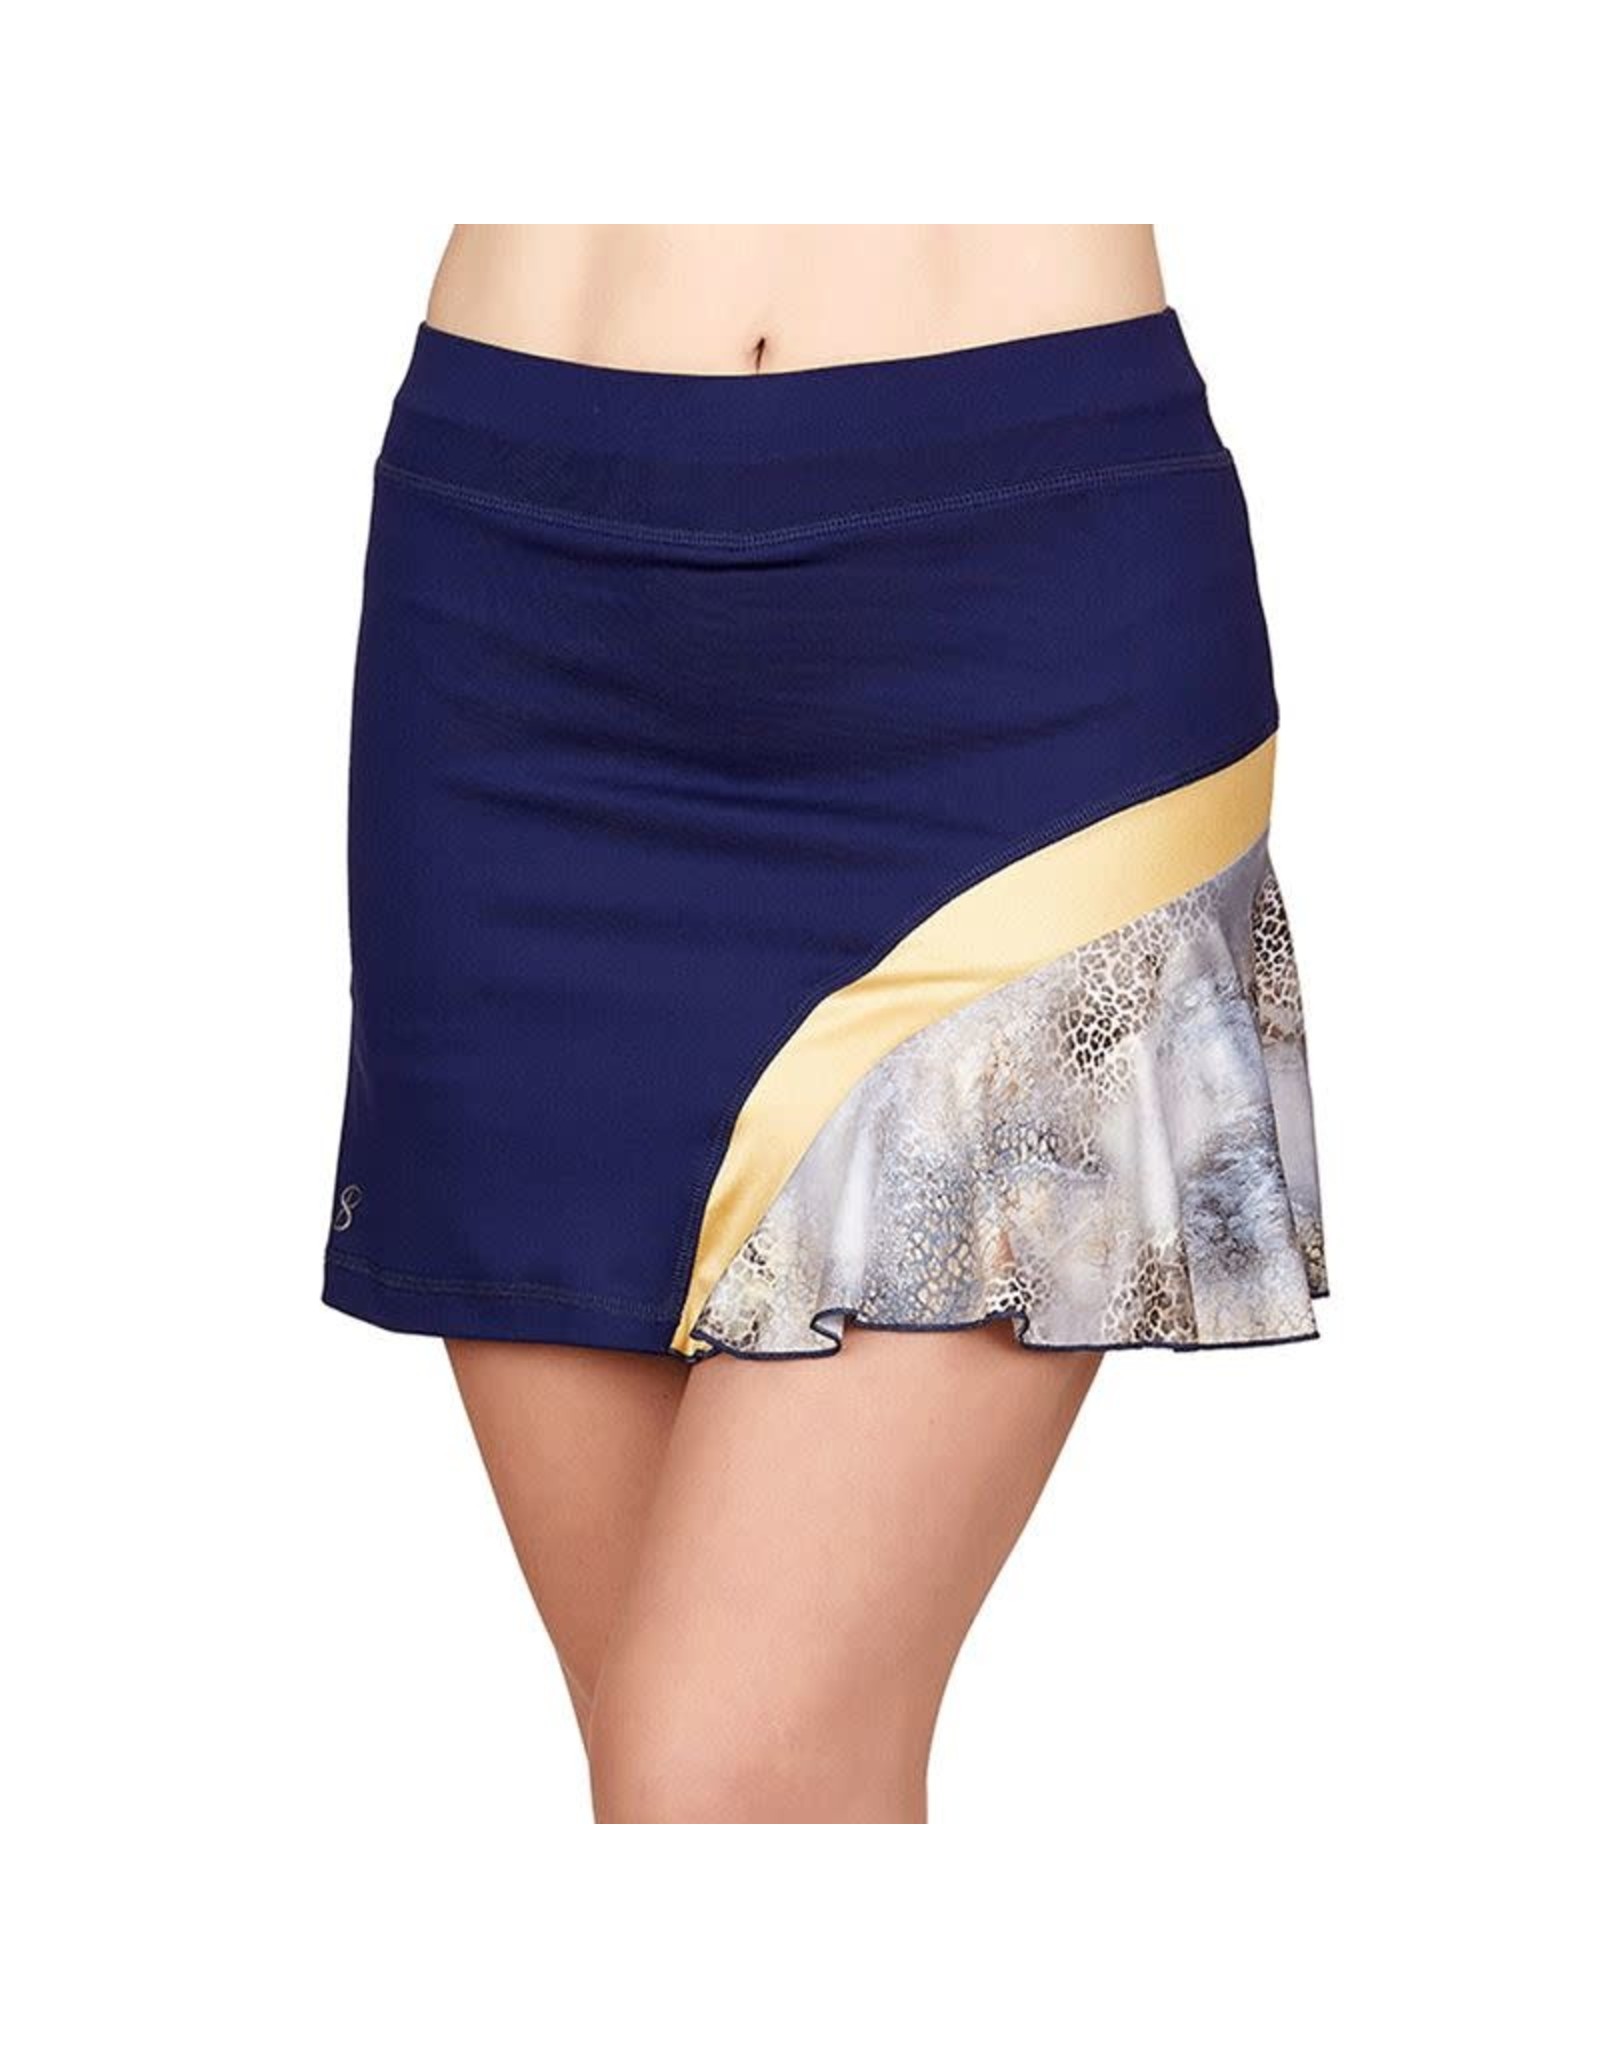 Sofibella Allure 15 inch Skirt